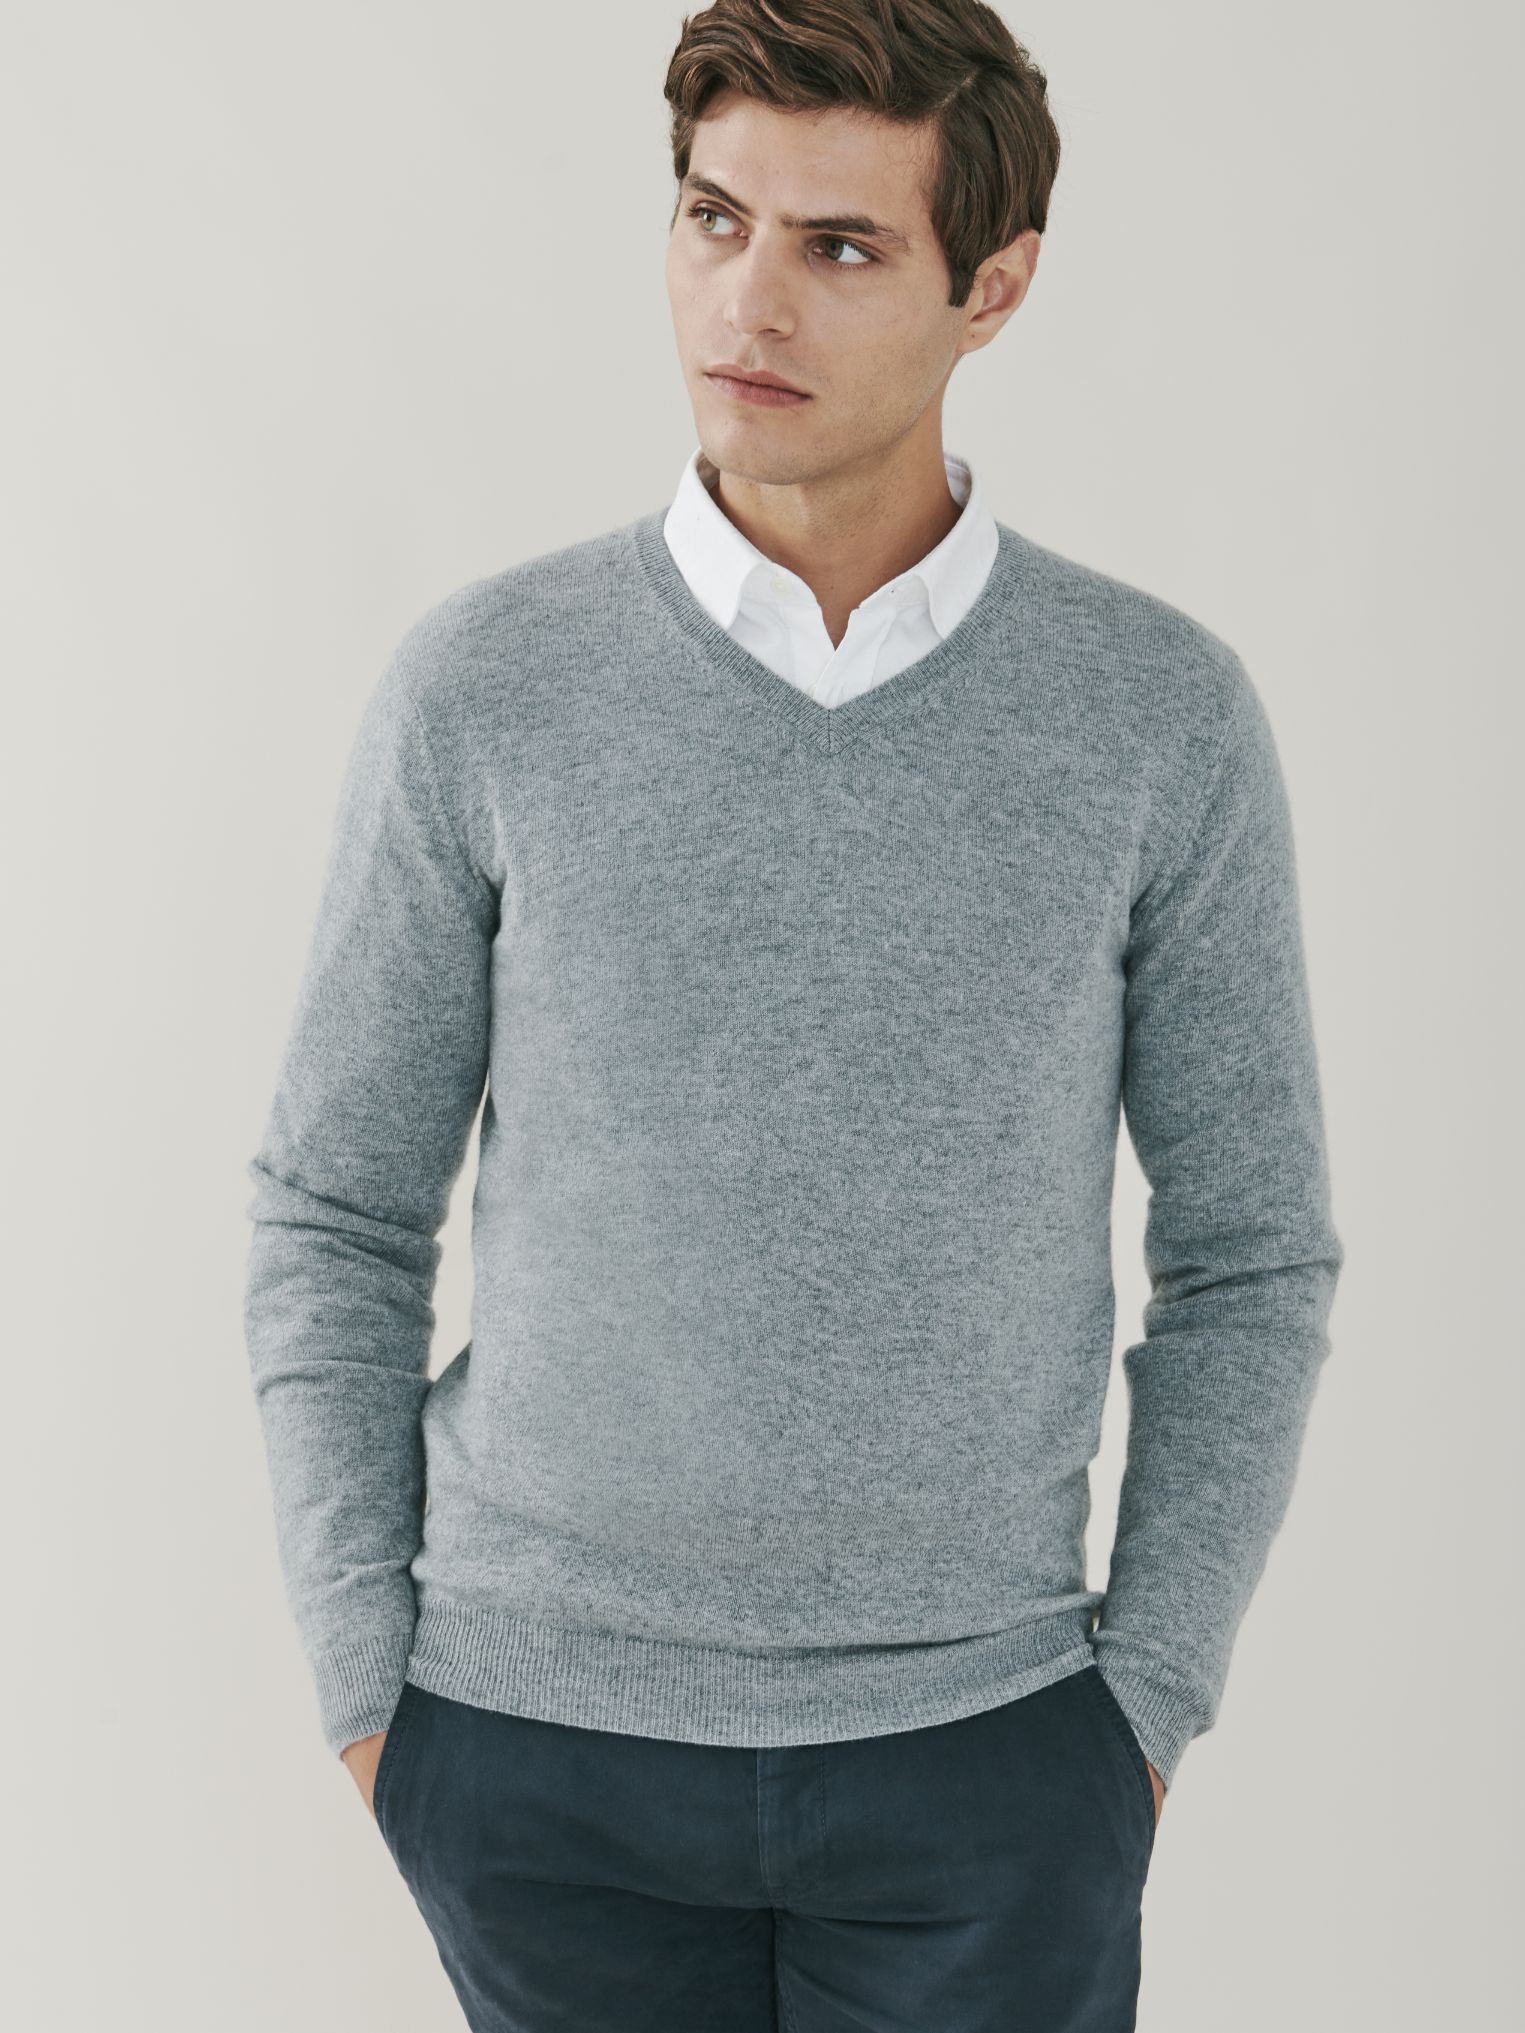 Killington | Men's Cashmere V Neck Sweater in Light Grey